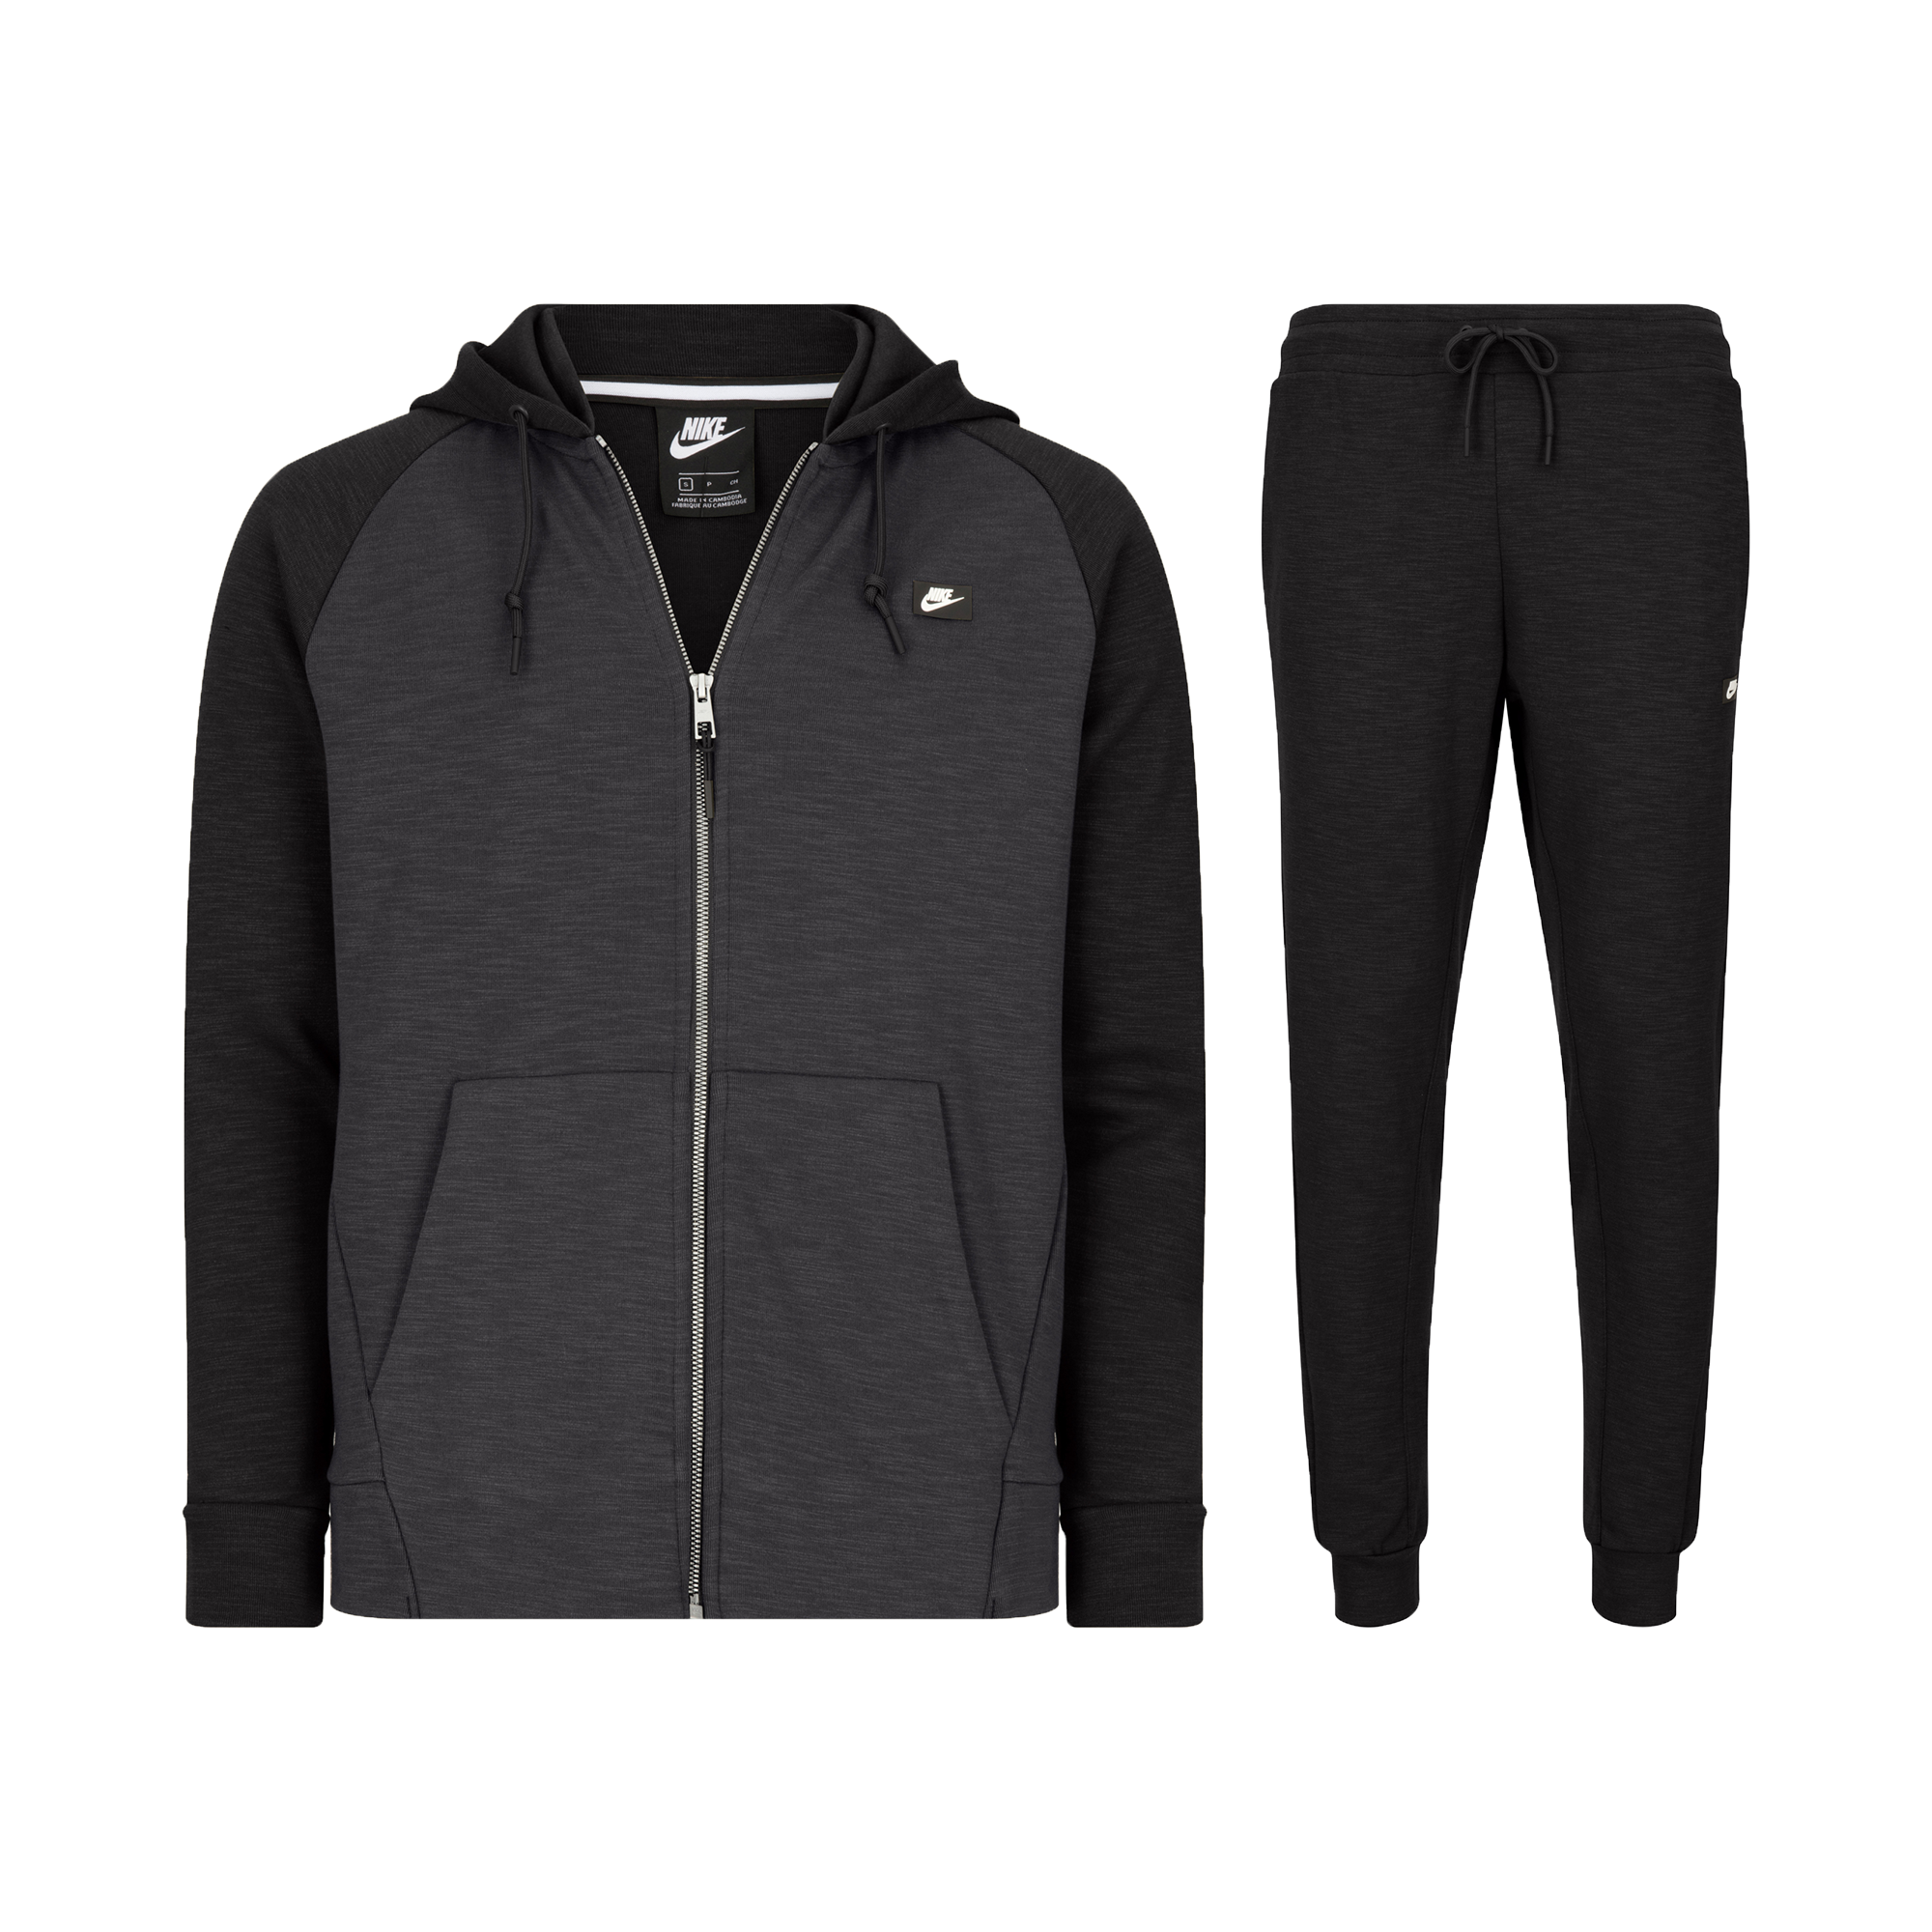 Nike Sportswear Men's Optic Full Zip Tracksuit, Black and Grey